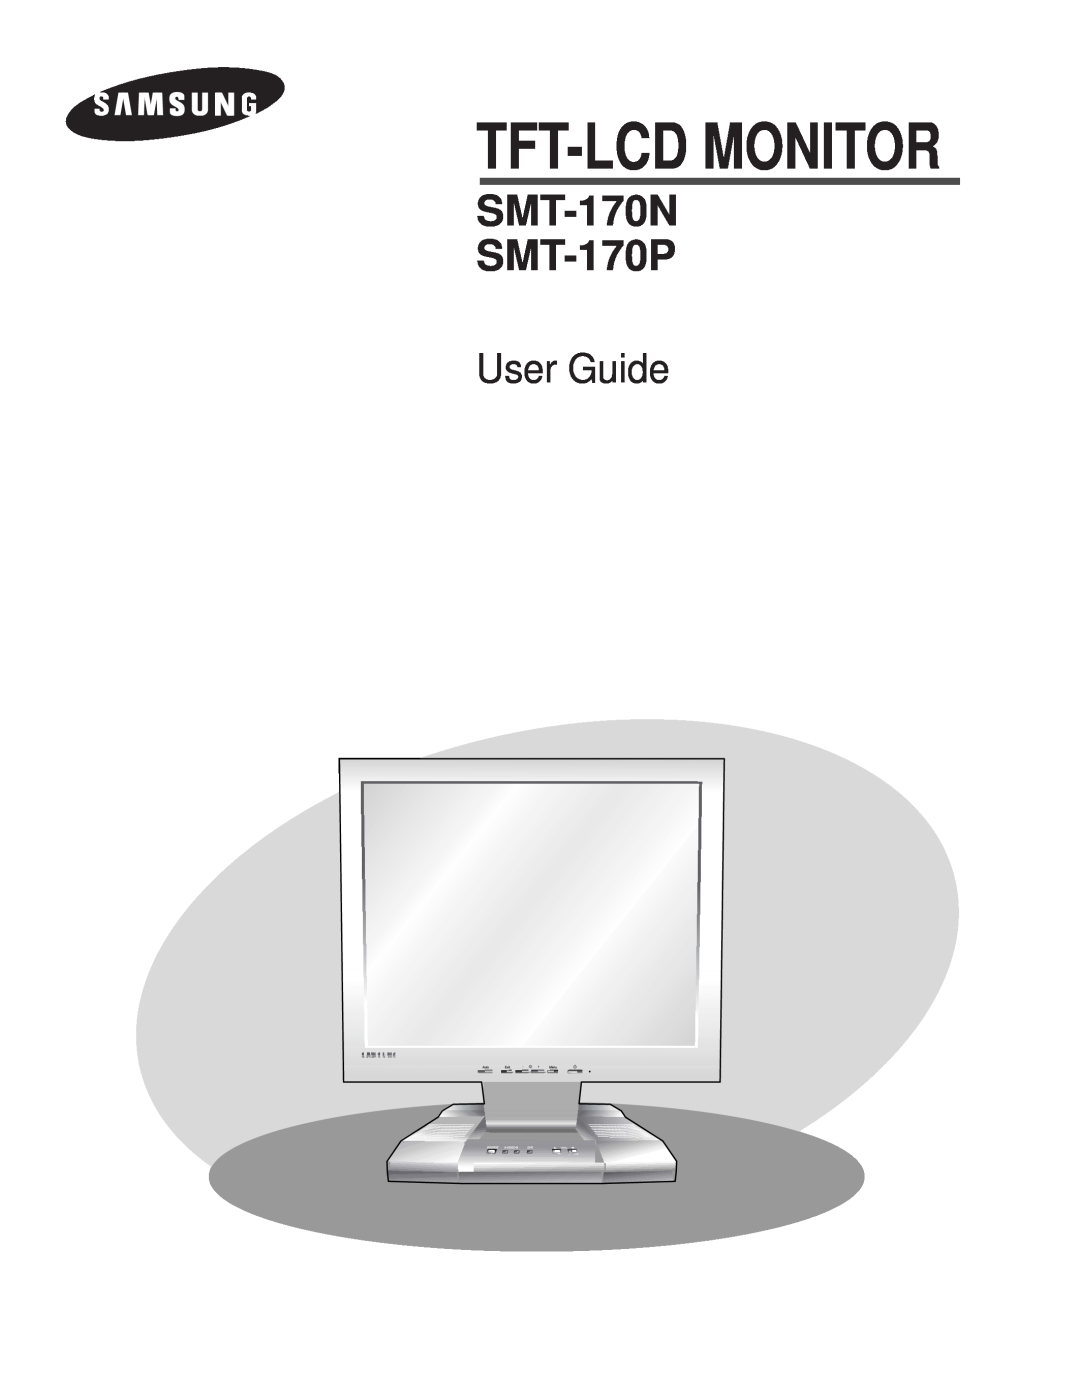 Samsung manual Tft-Lcd Monitor, SMT-170N SMT-170P, User Guide 